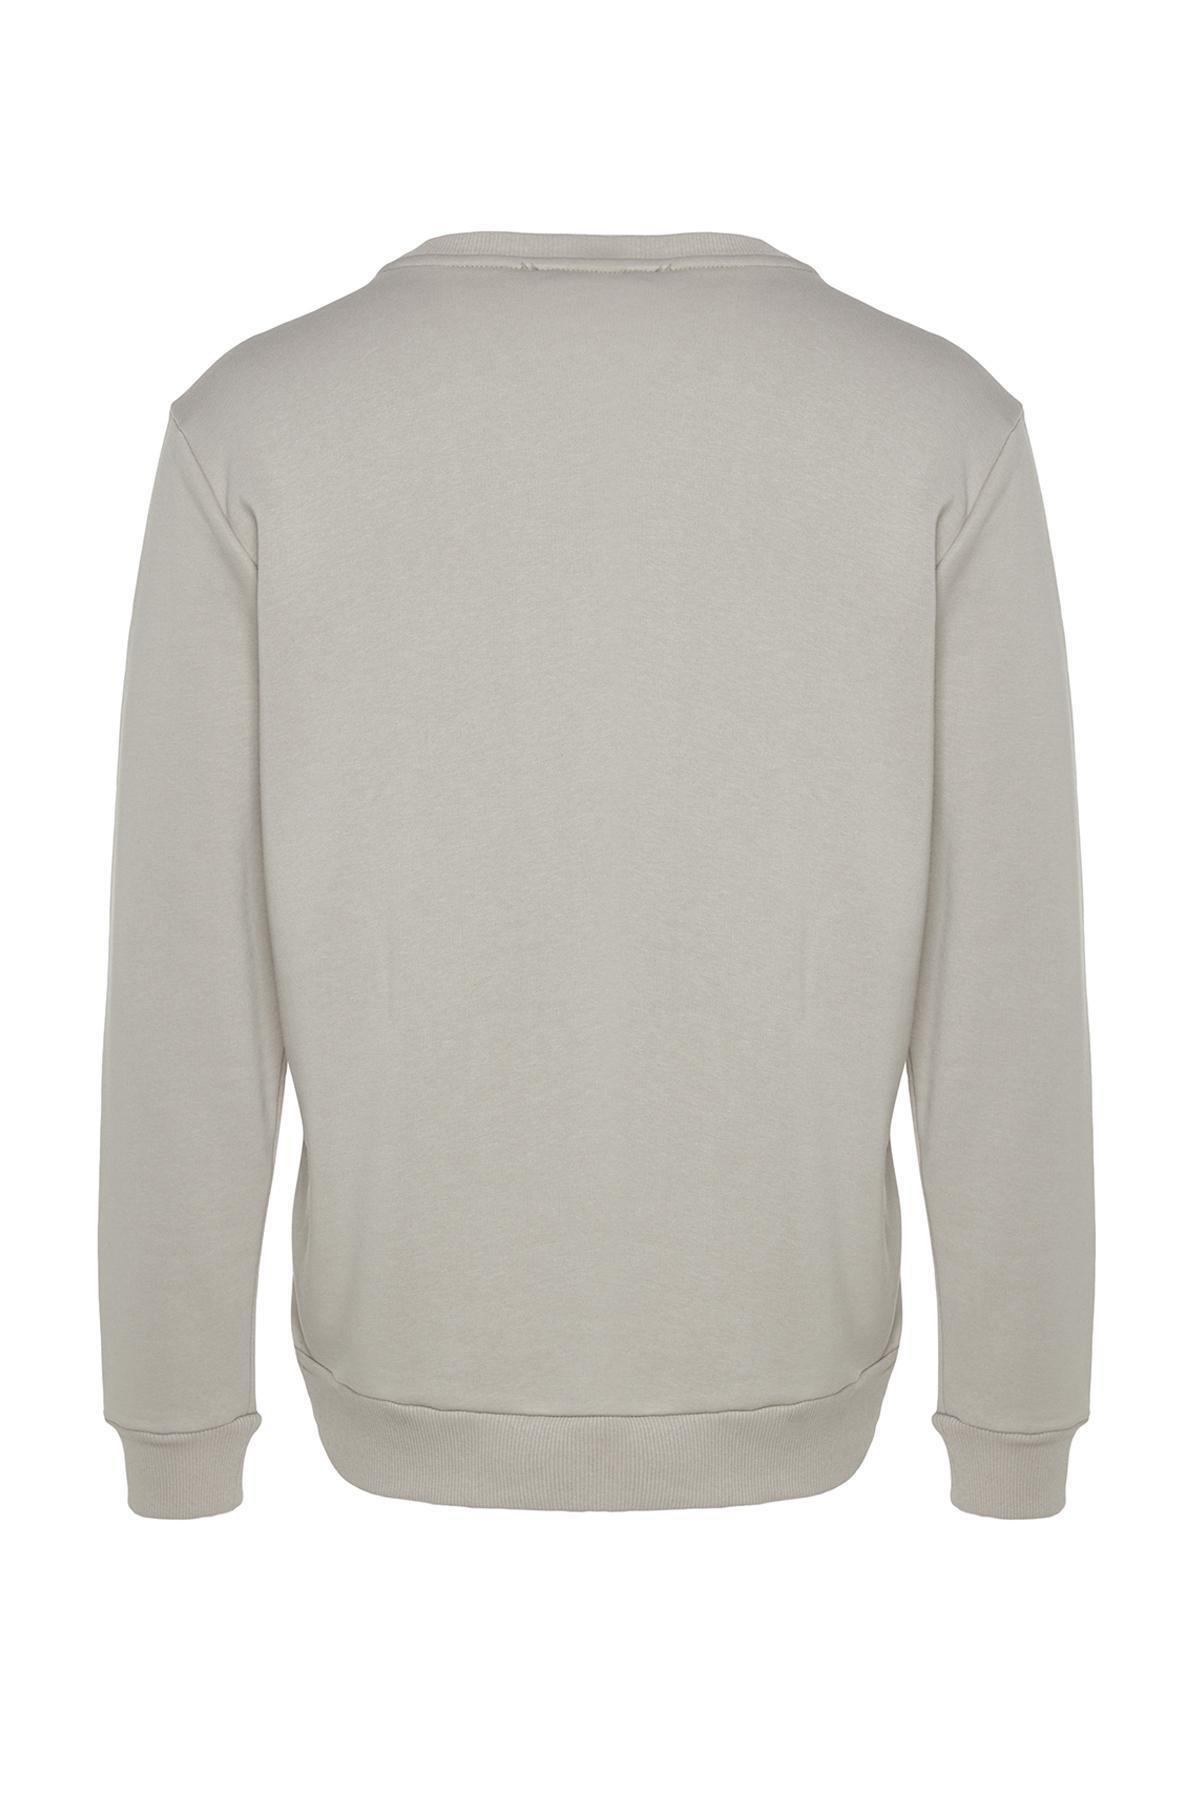 Trendyol - Gray Text Printed Sweatshirt